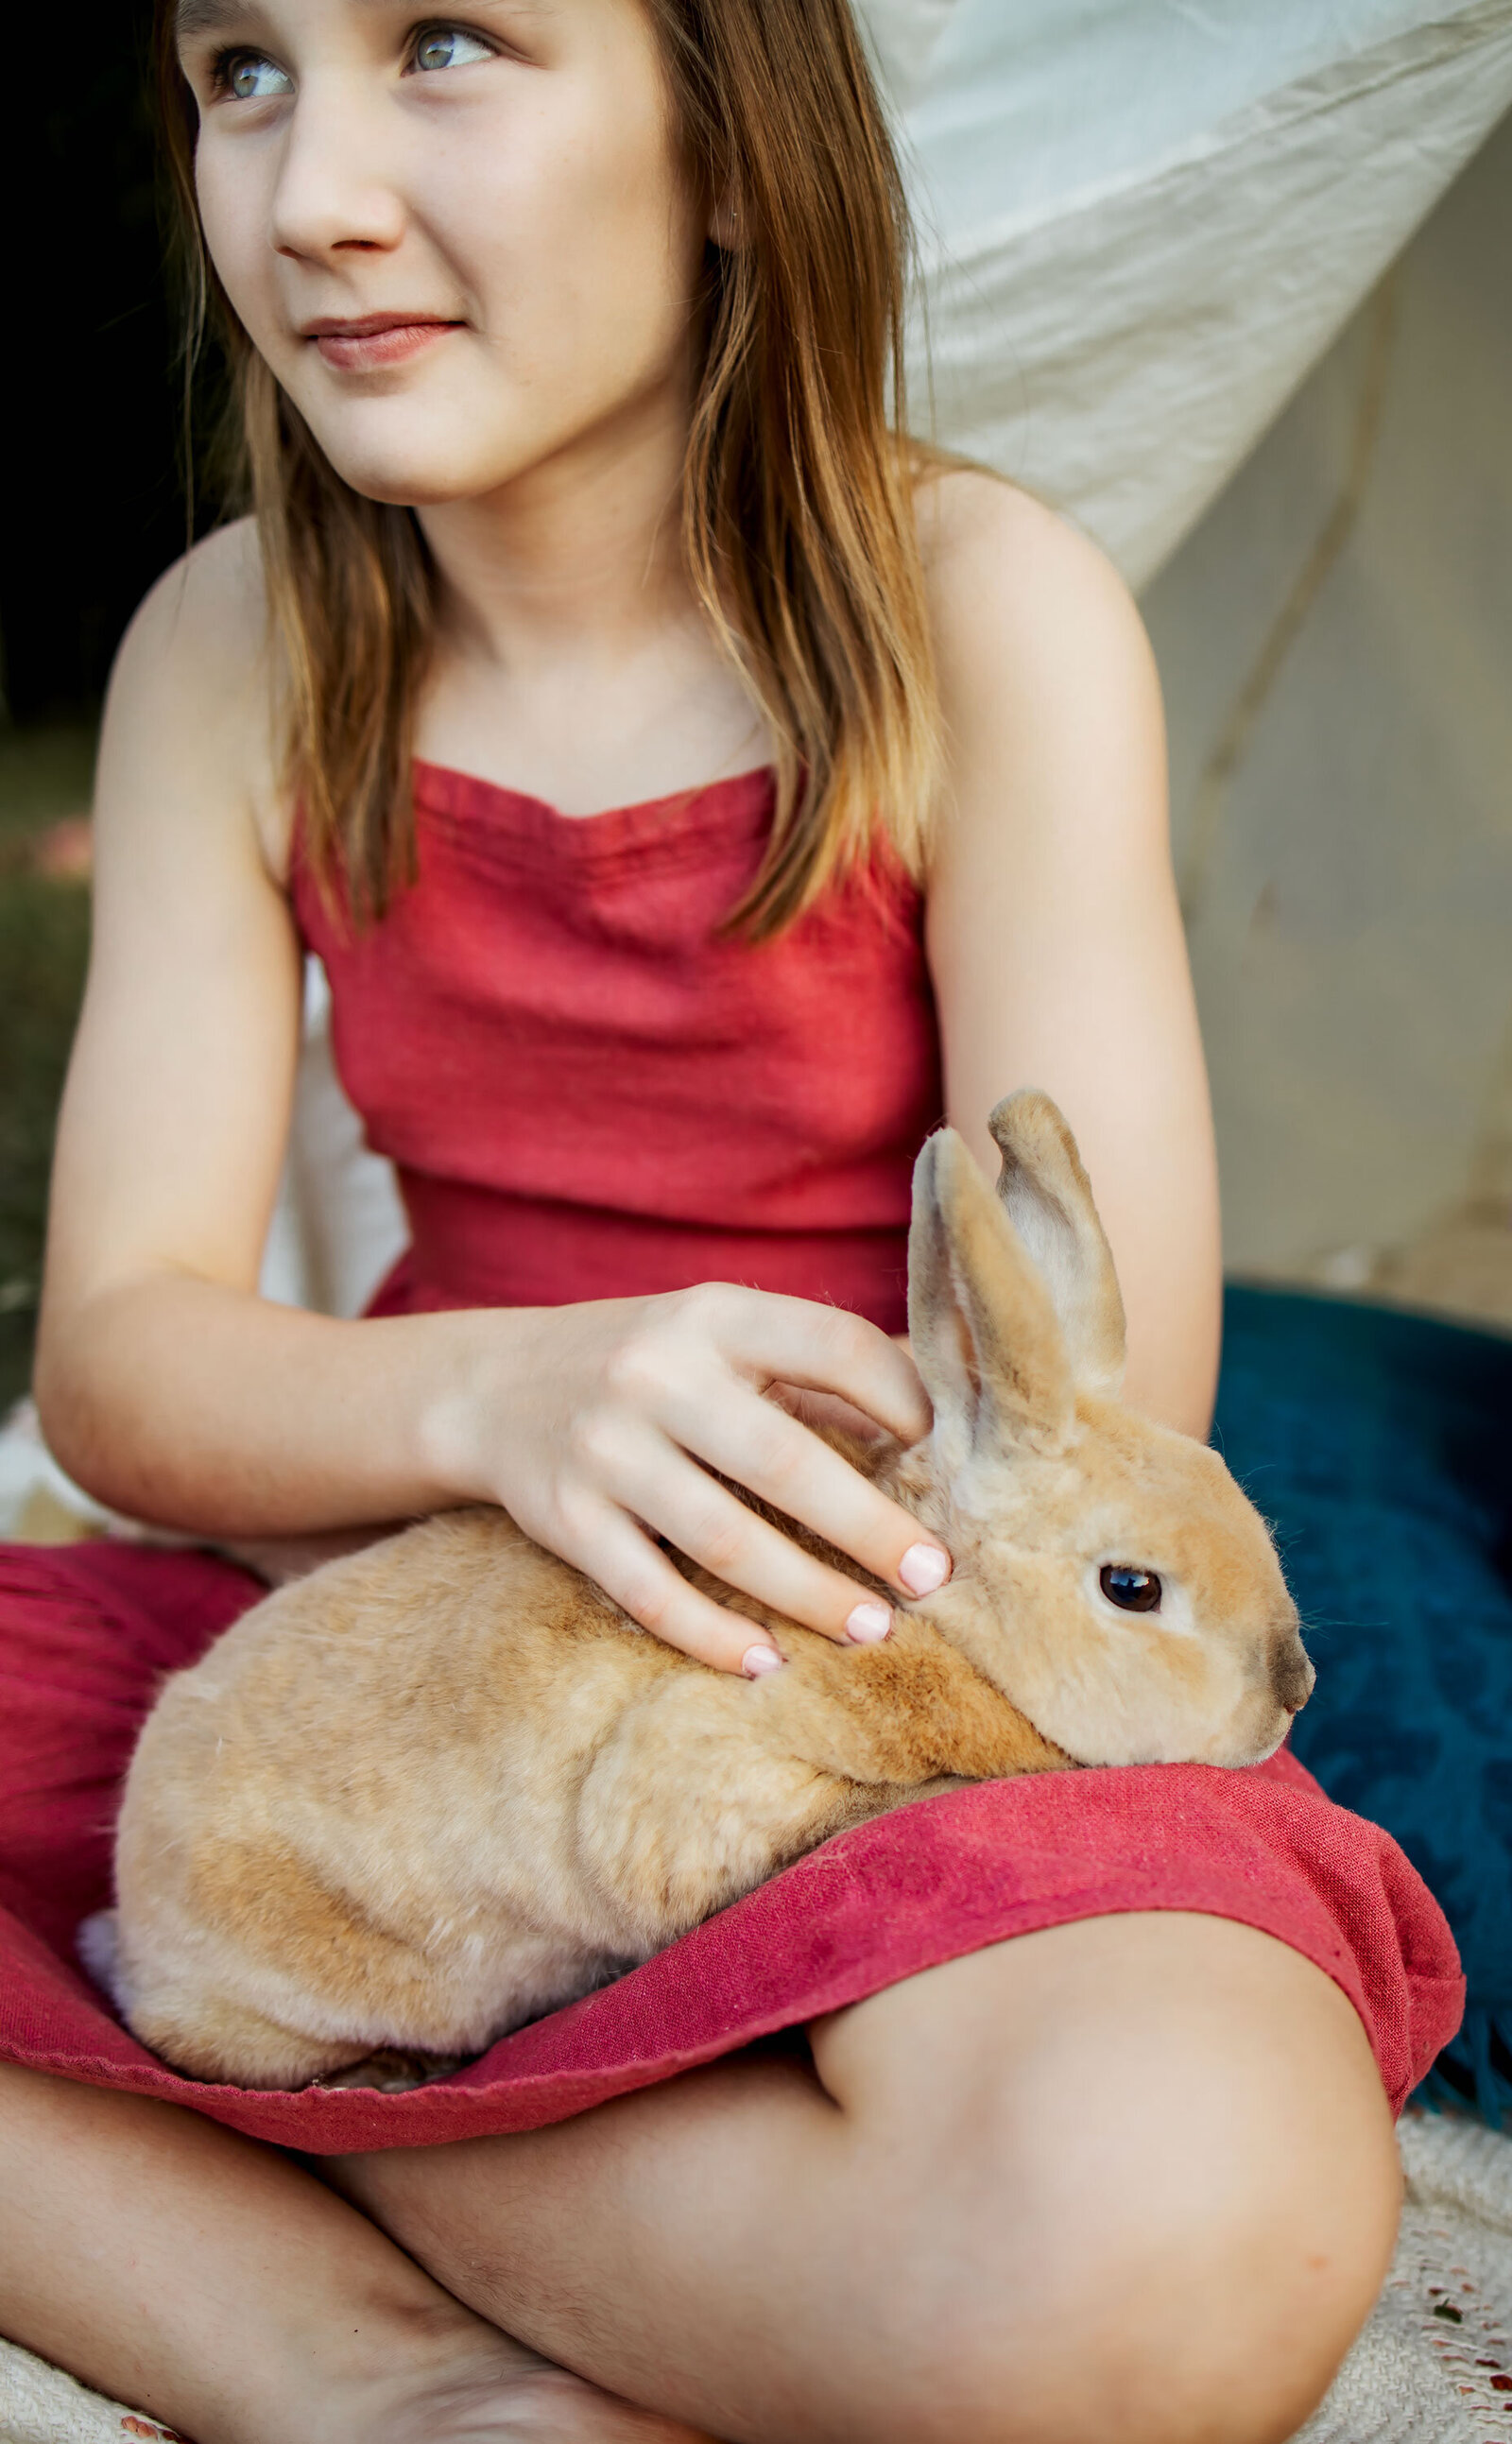 pet rabbit in a girl's lap